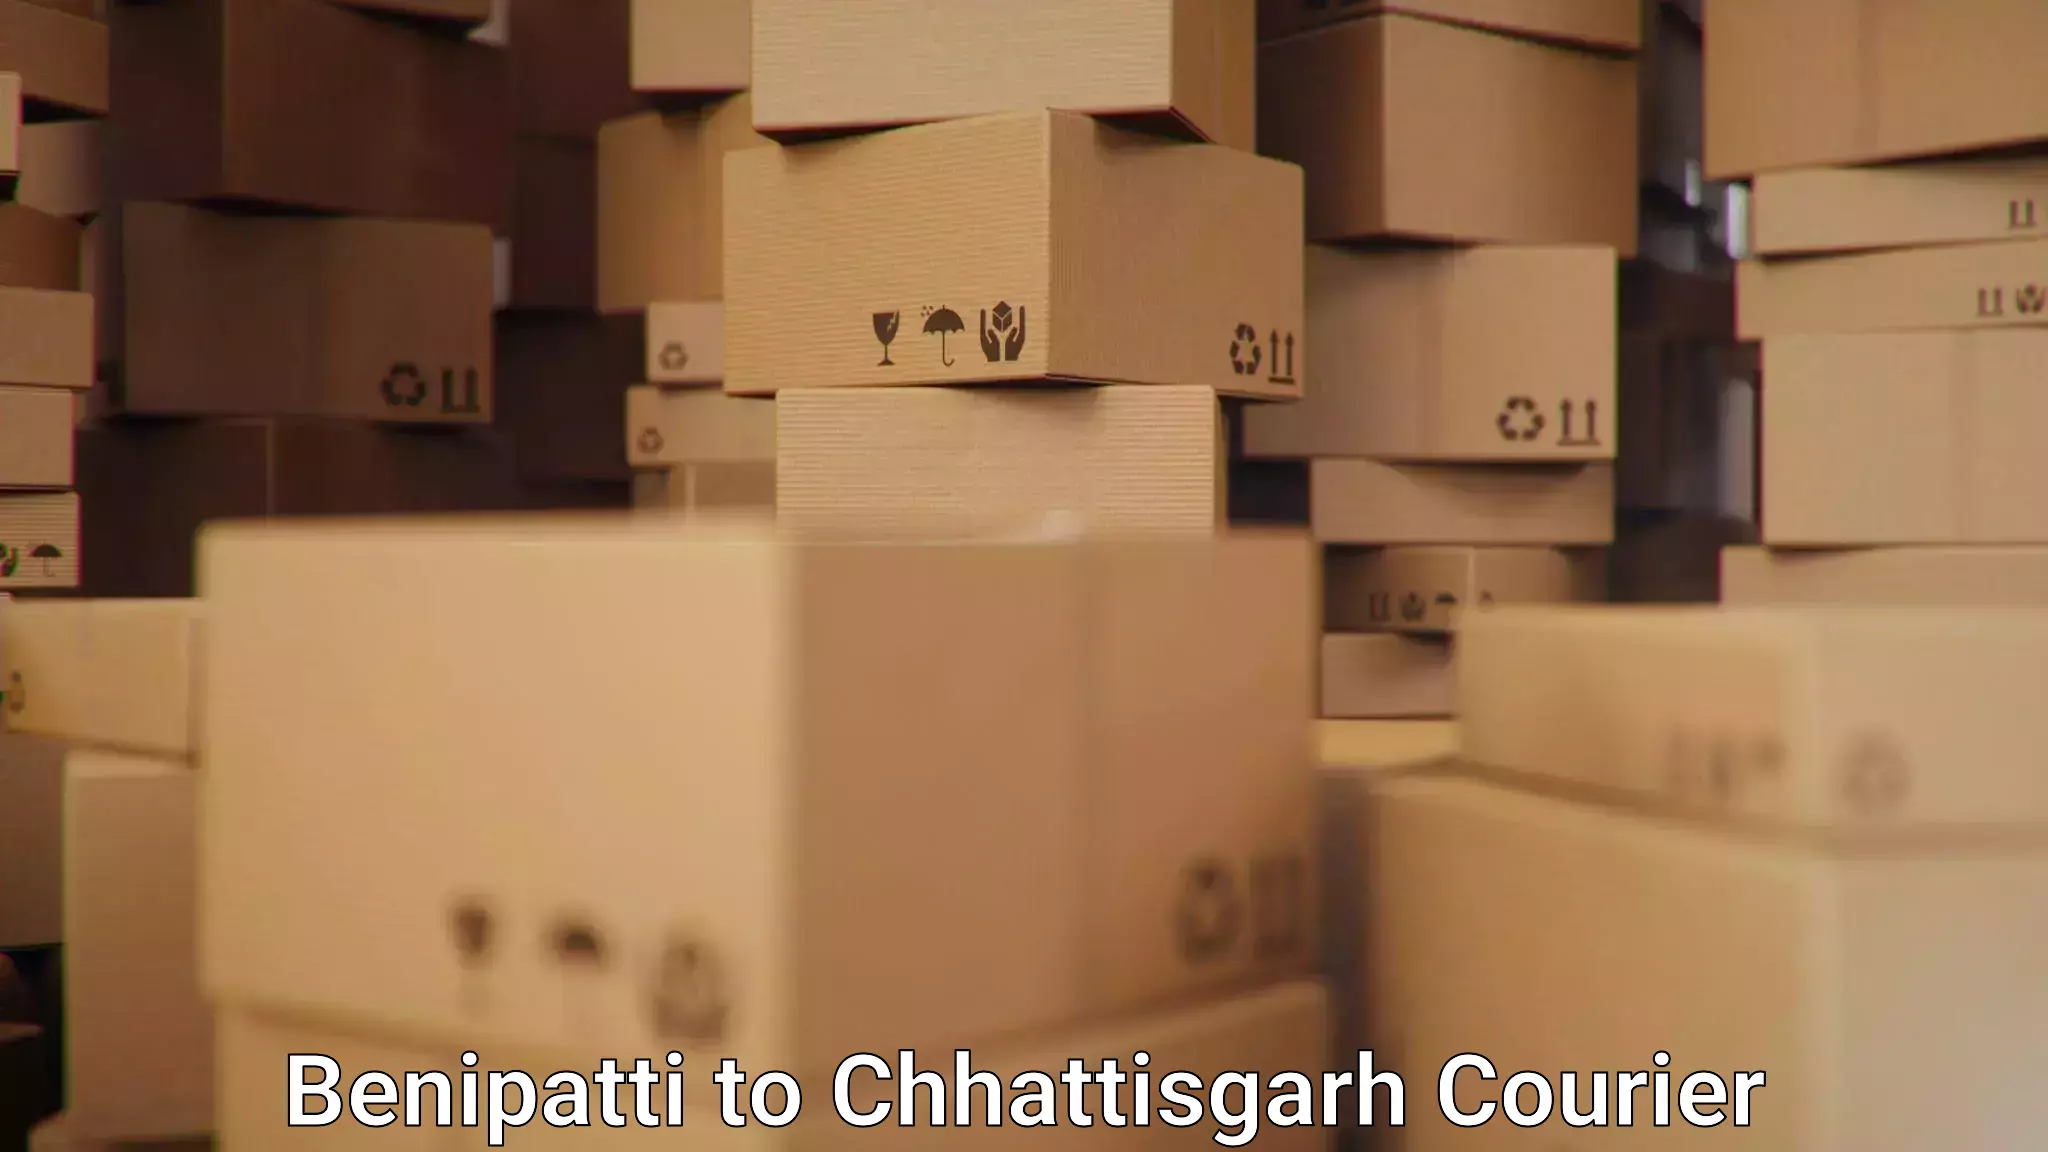 Courier service efficiency Benipatti to Bijapur Chhattisgarh